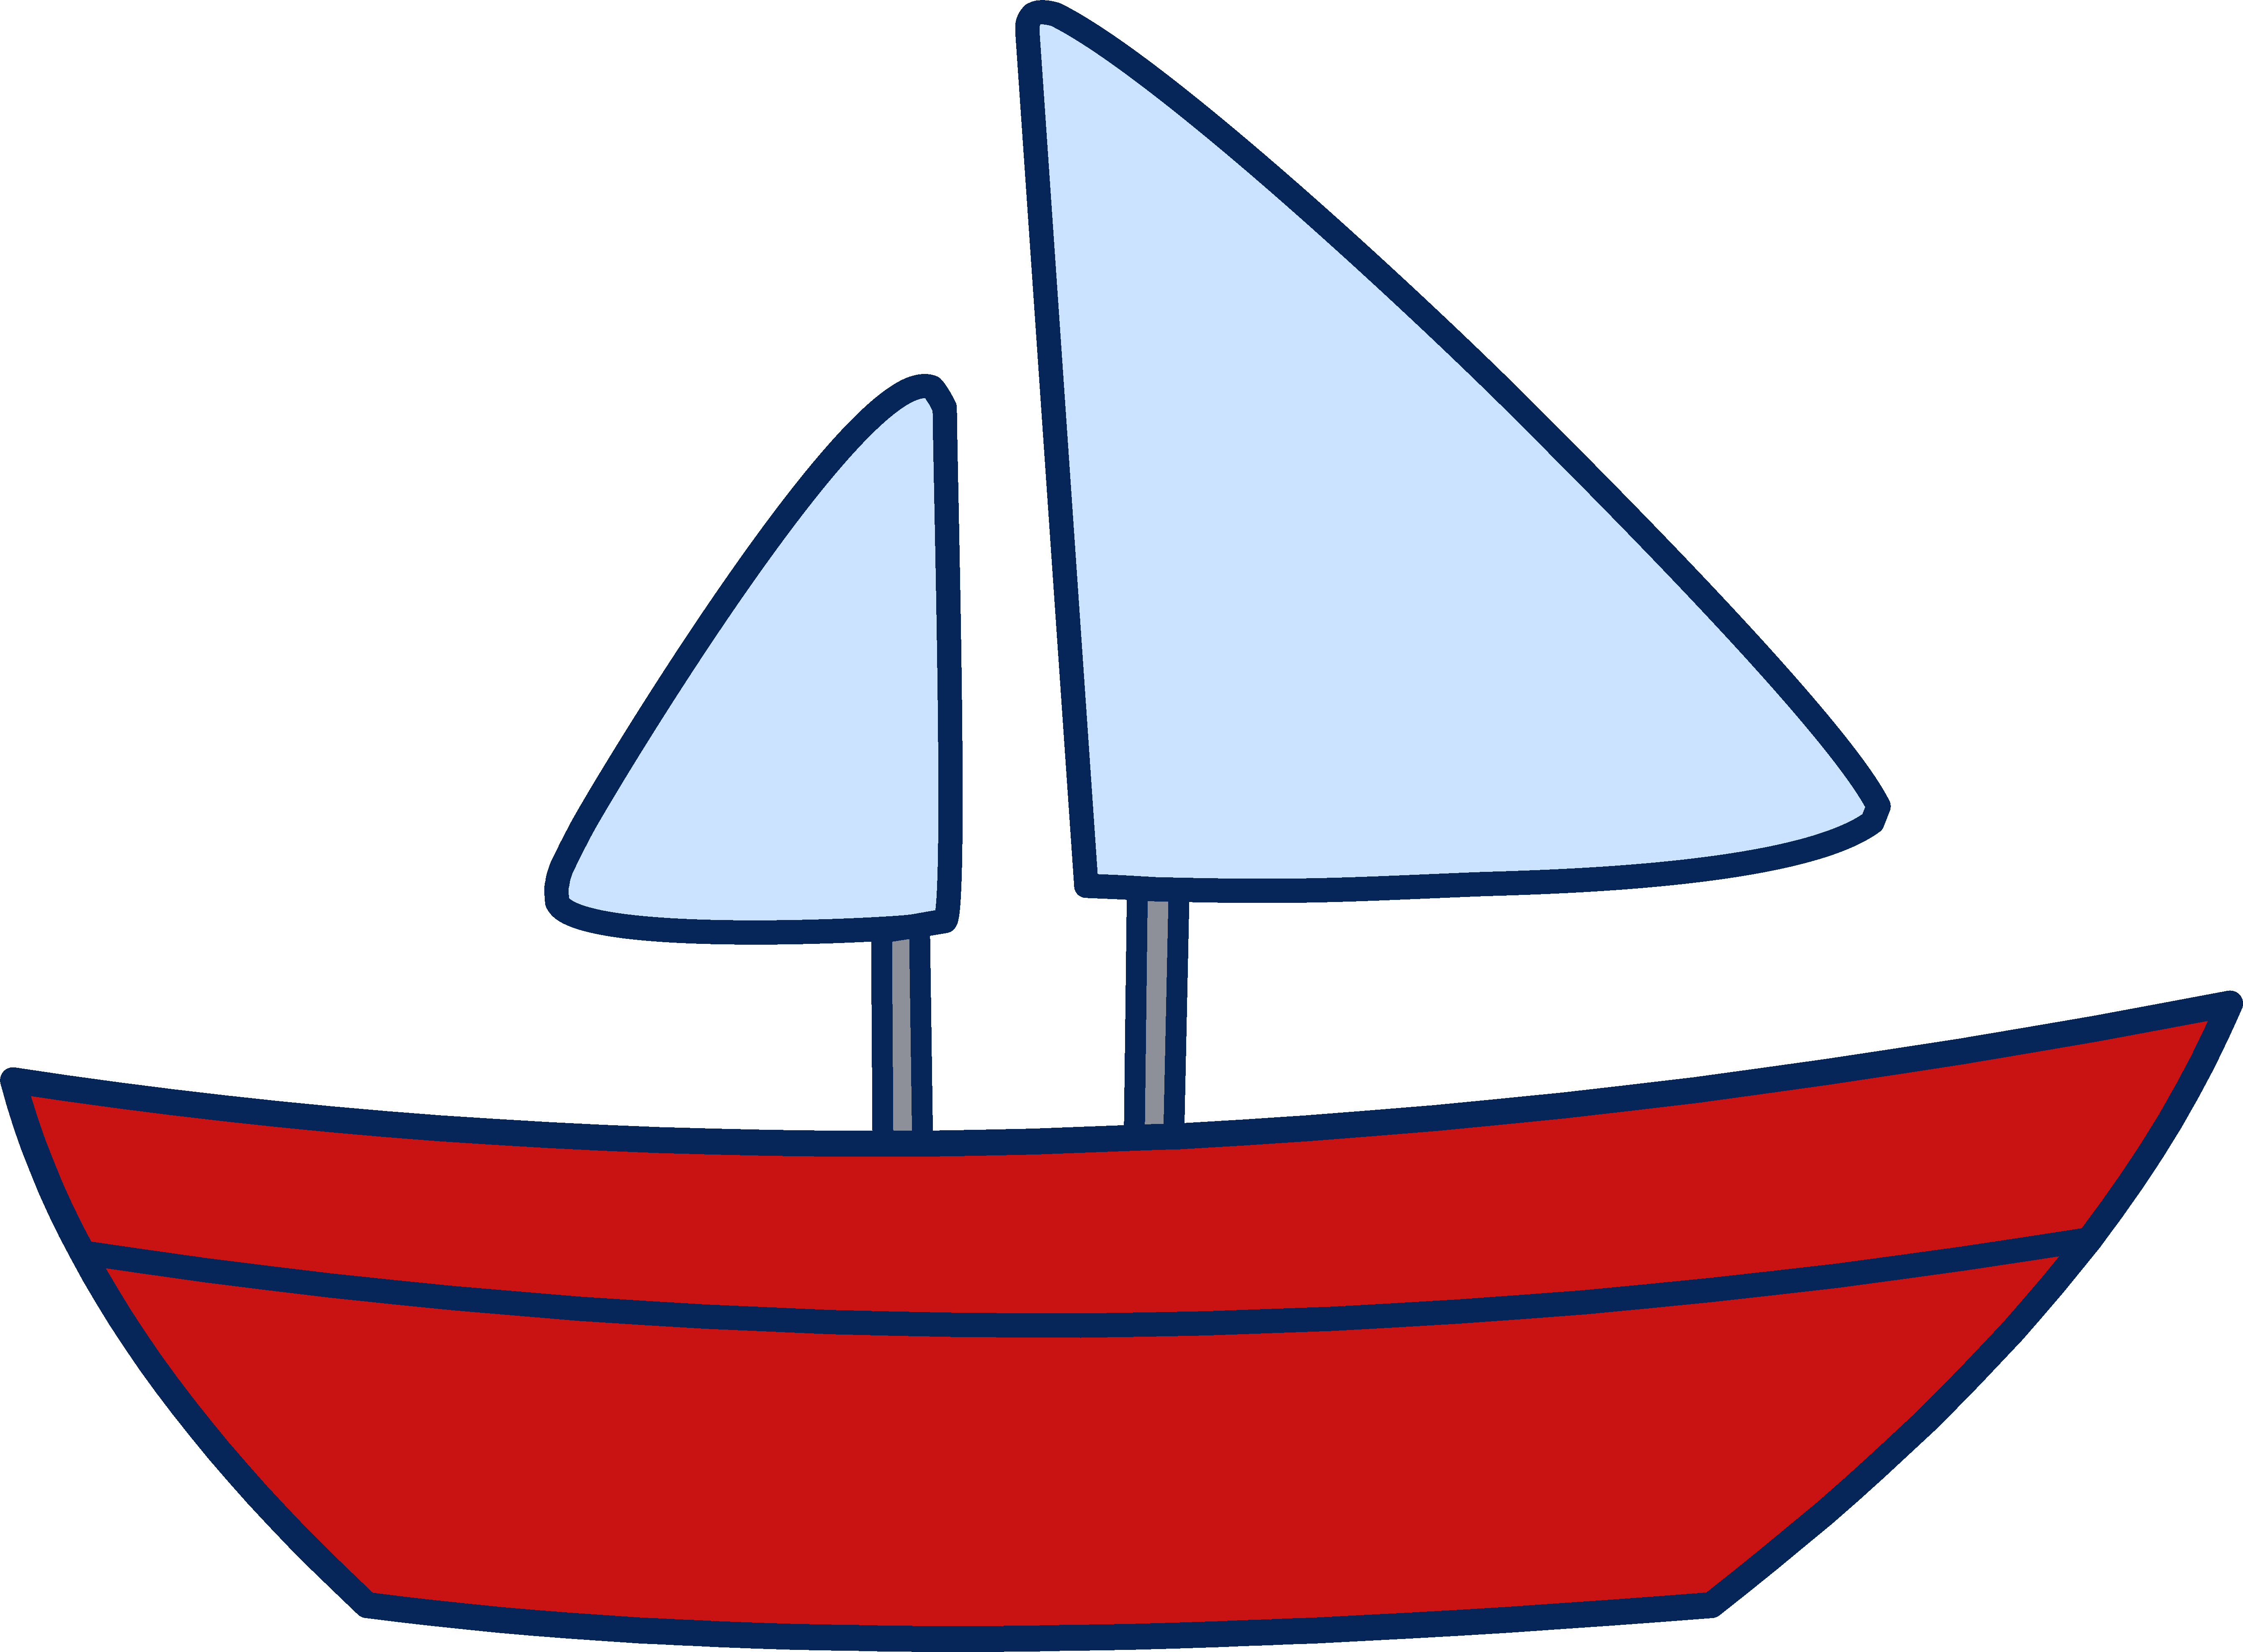 Sailboat clipart 2